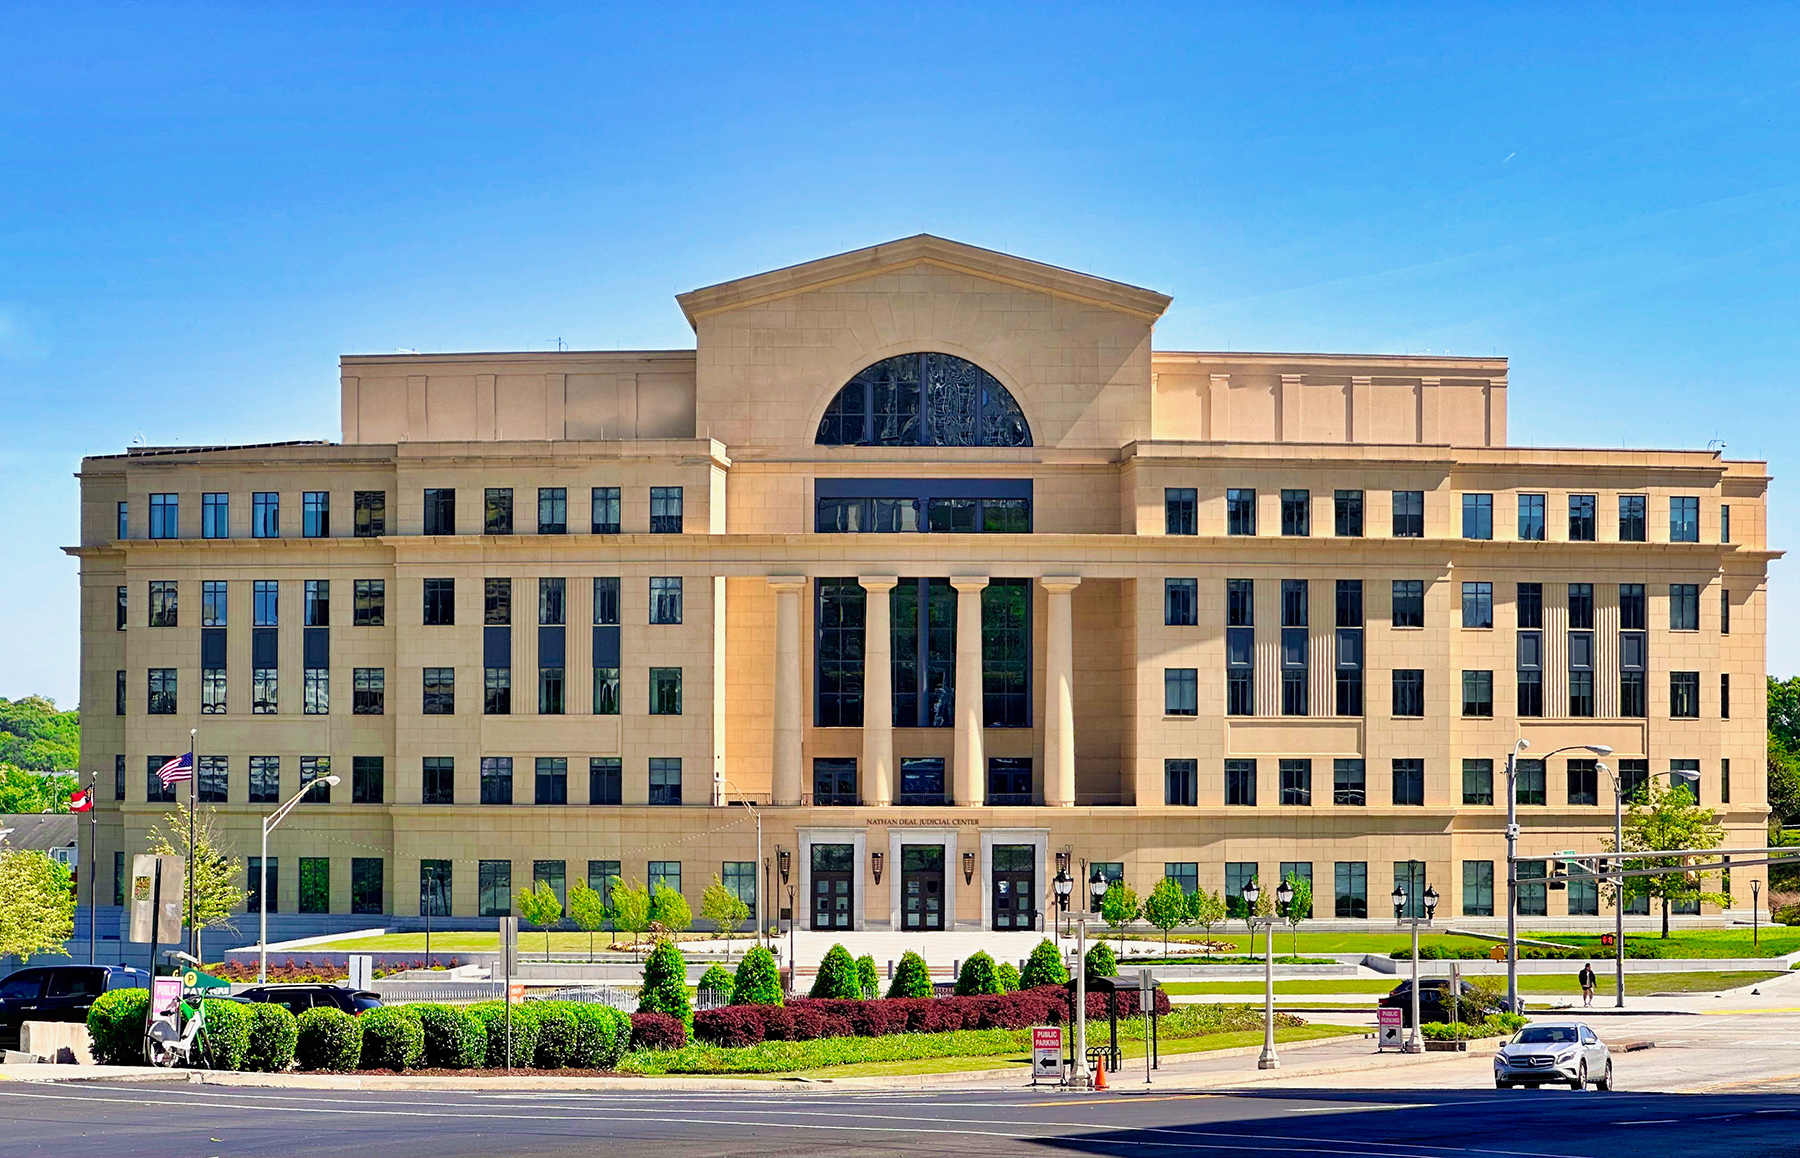 The Supreme Court of Georgia at the Nathan Deal Judicial Center in Atlanta, Georgia